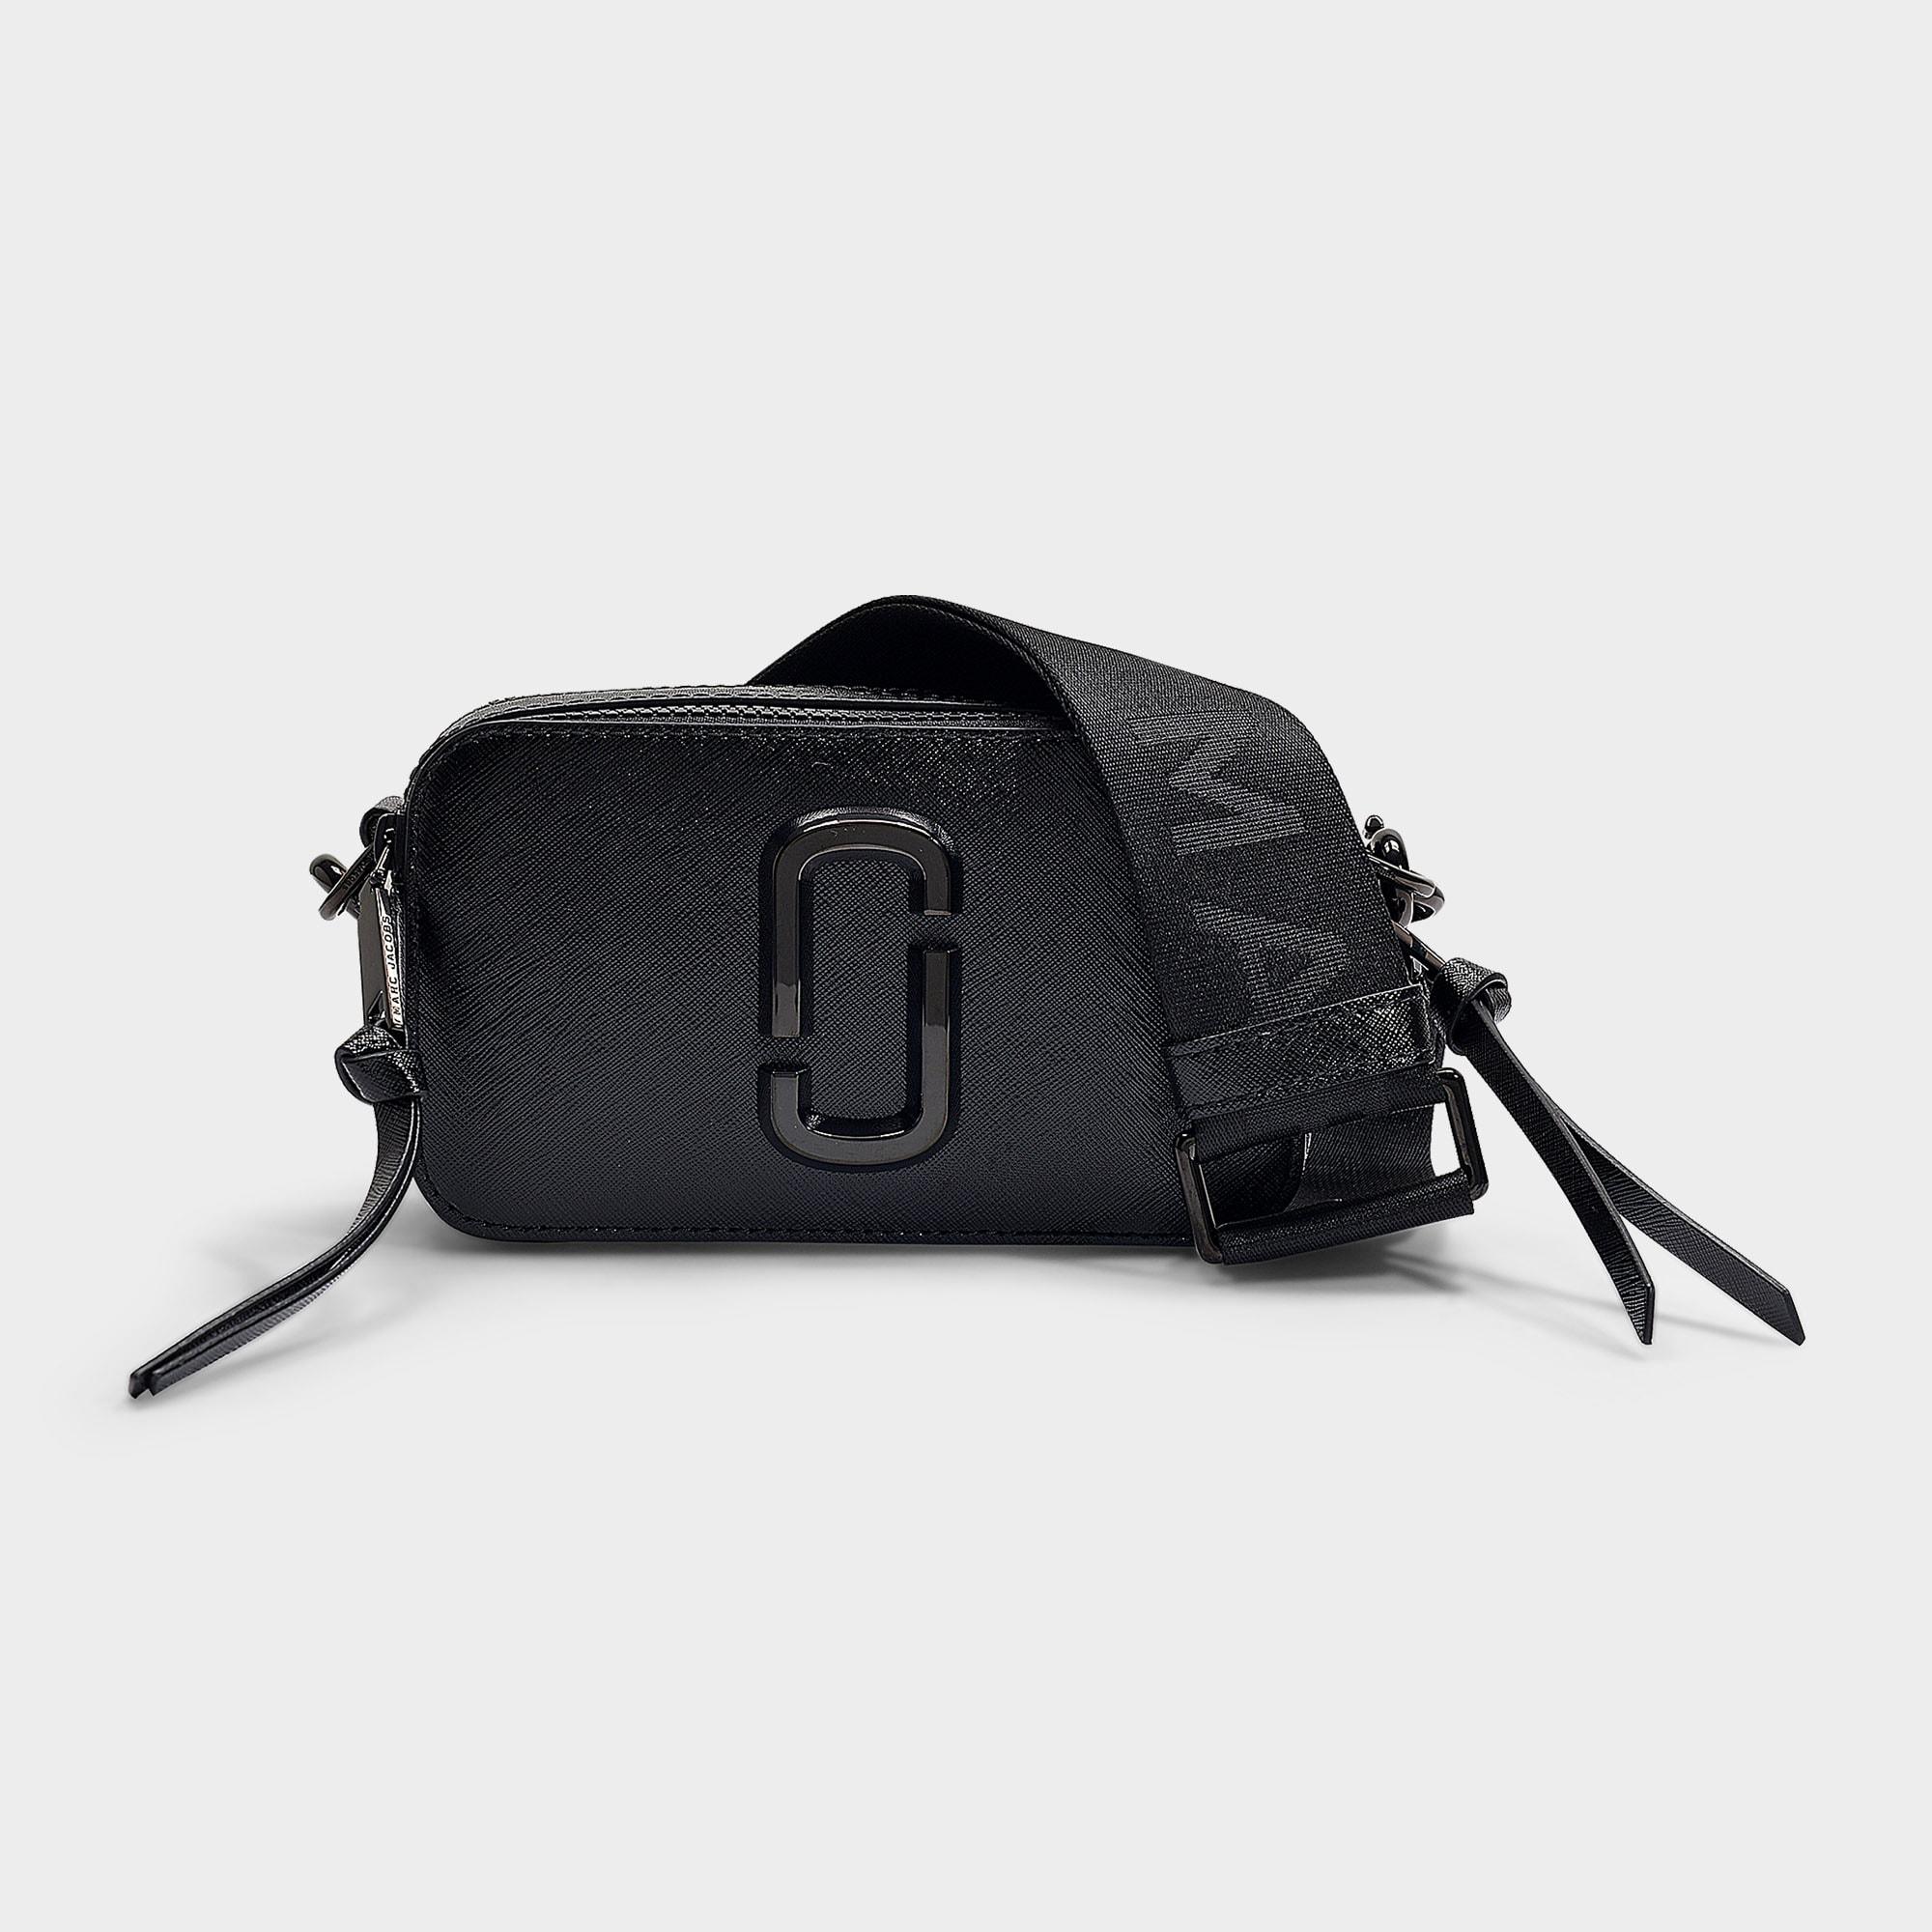 Marc Jacobs Leather Snapshot Dtm Camera Bag in Black - Lyst